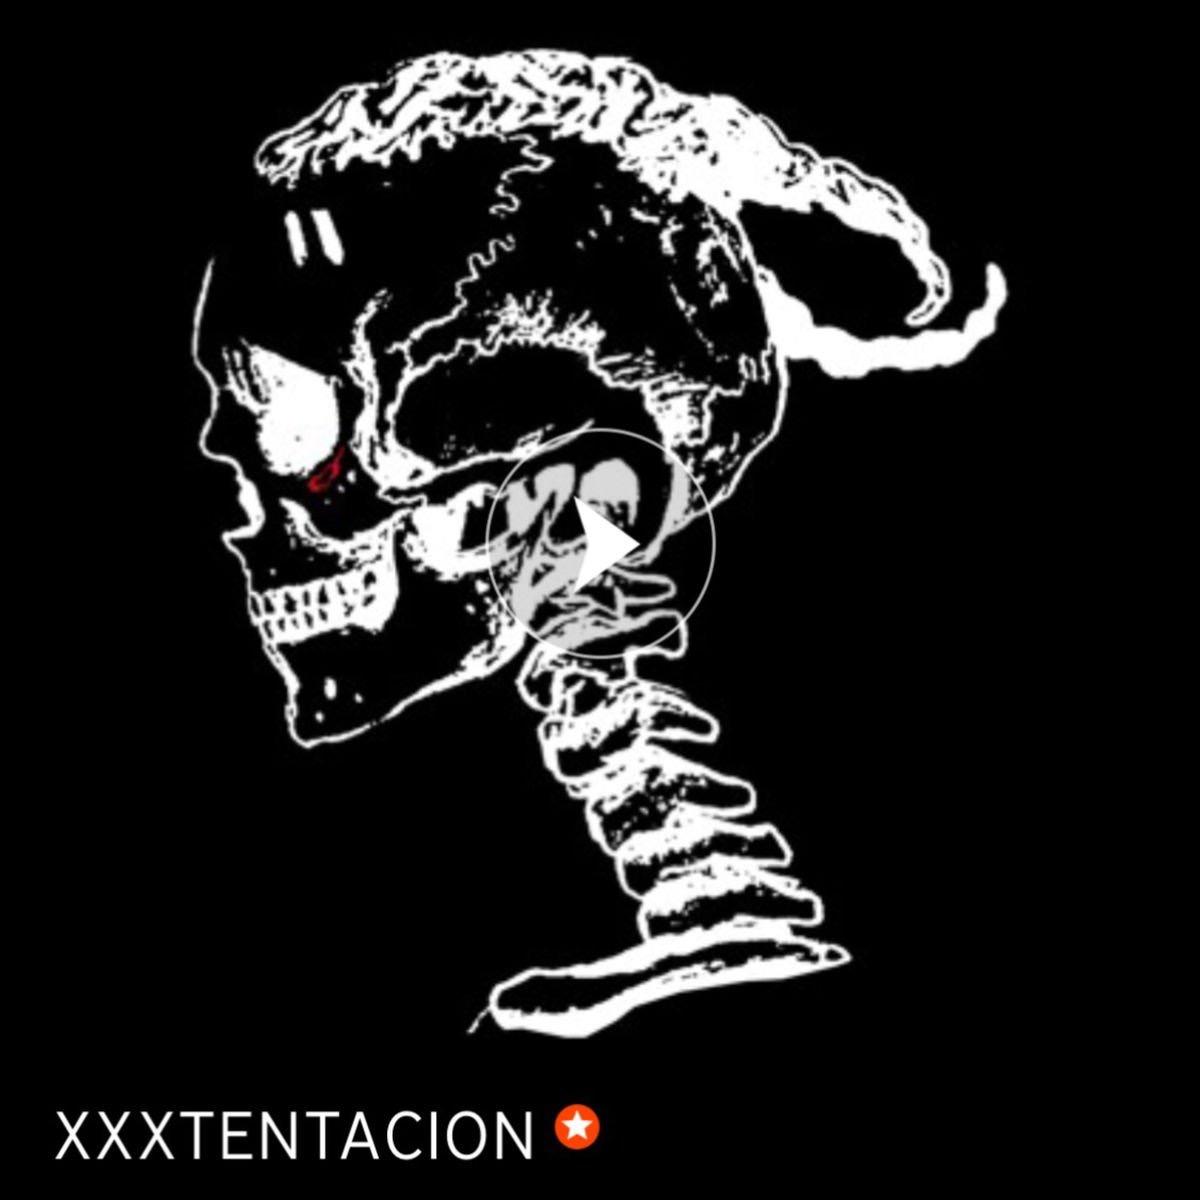 XXXTentacion “Shining Like The Northstar”